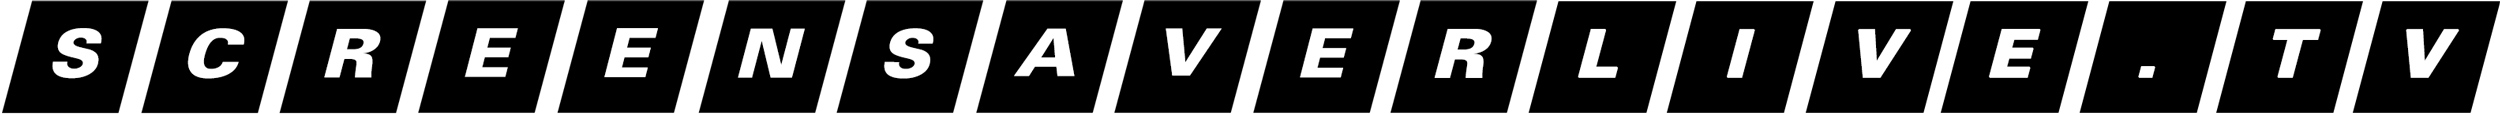 Screensaverlivetv-Logotype